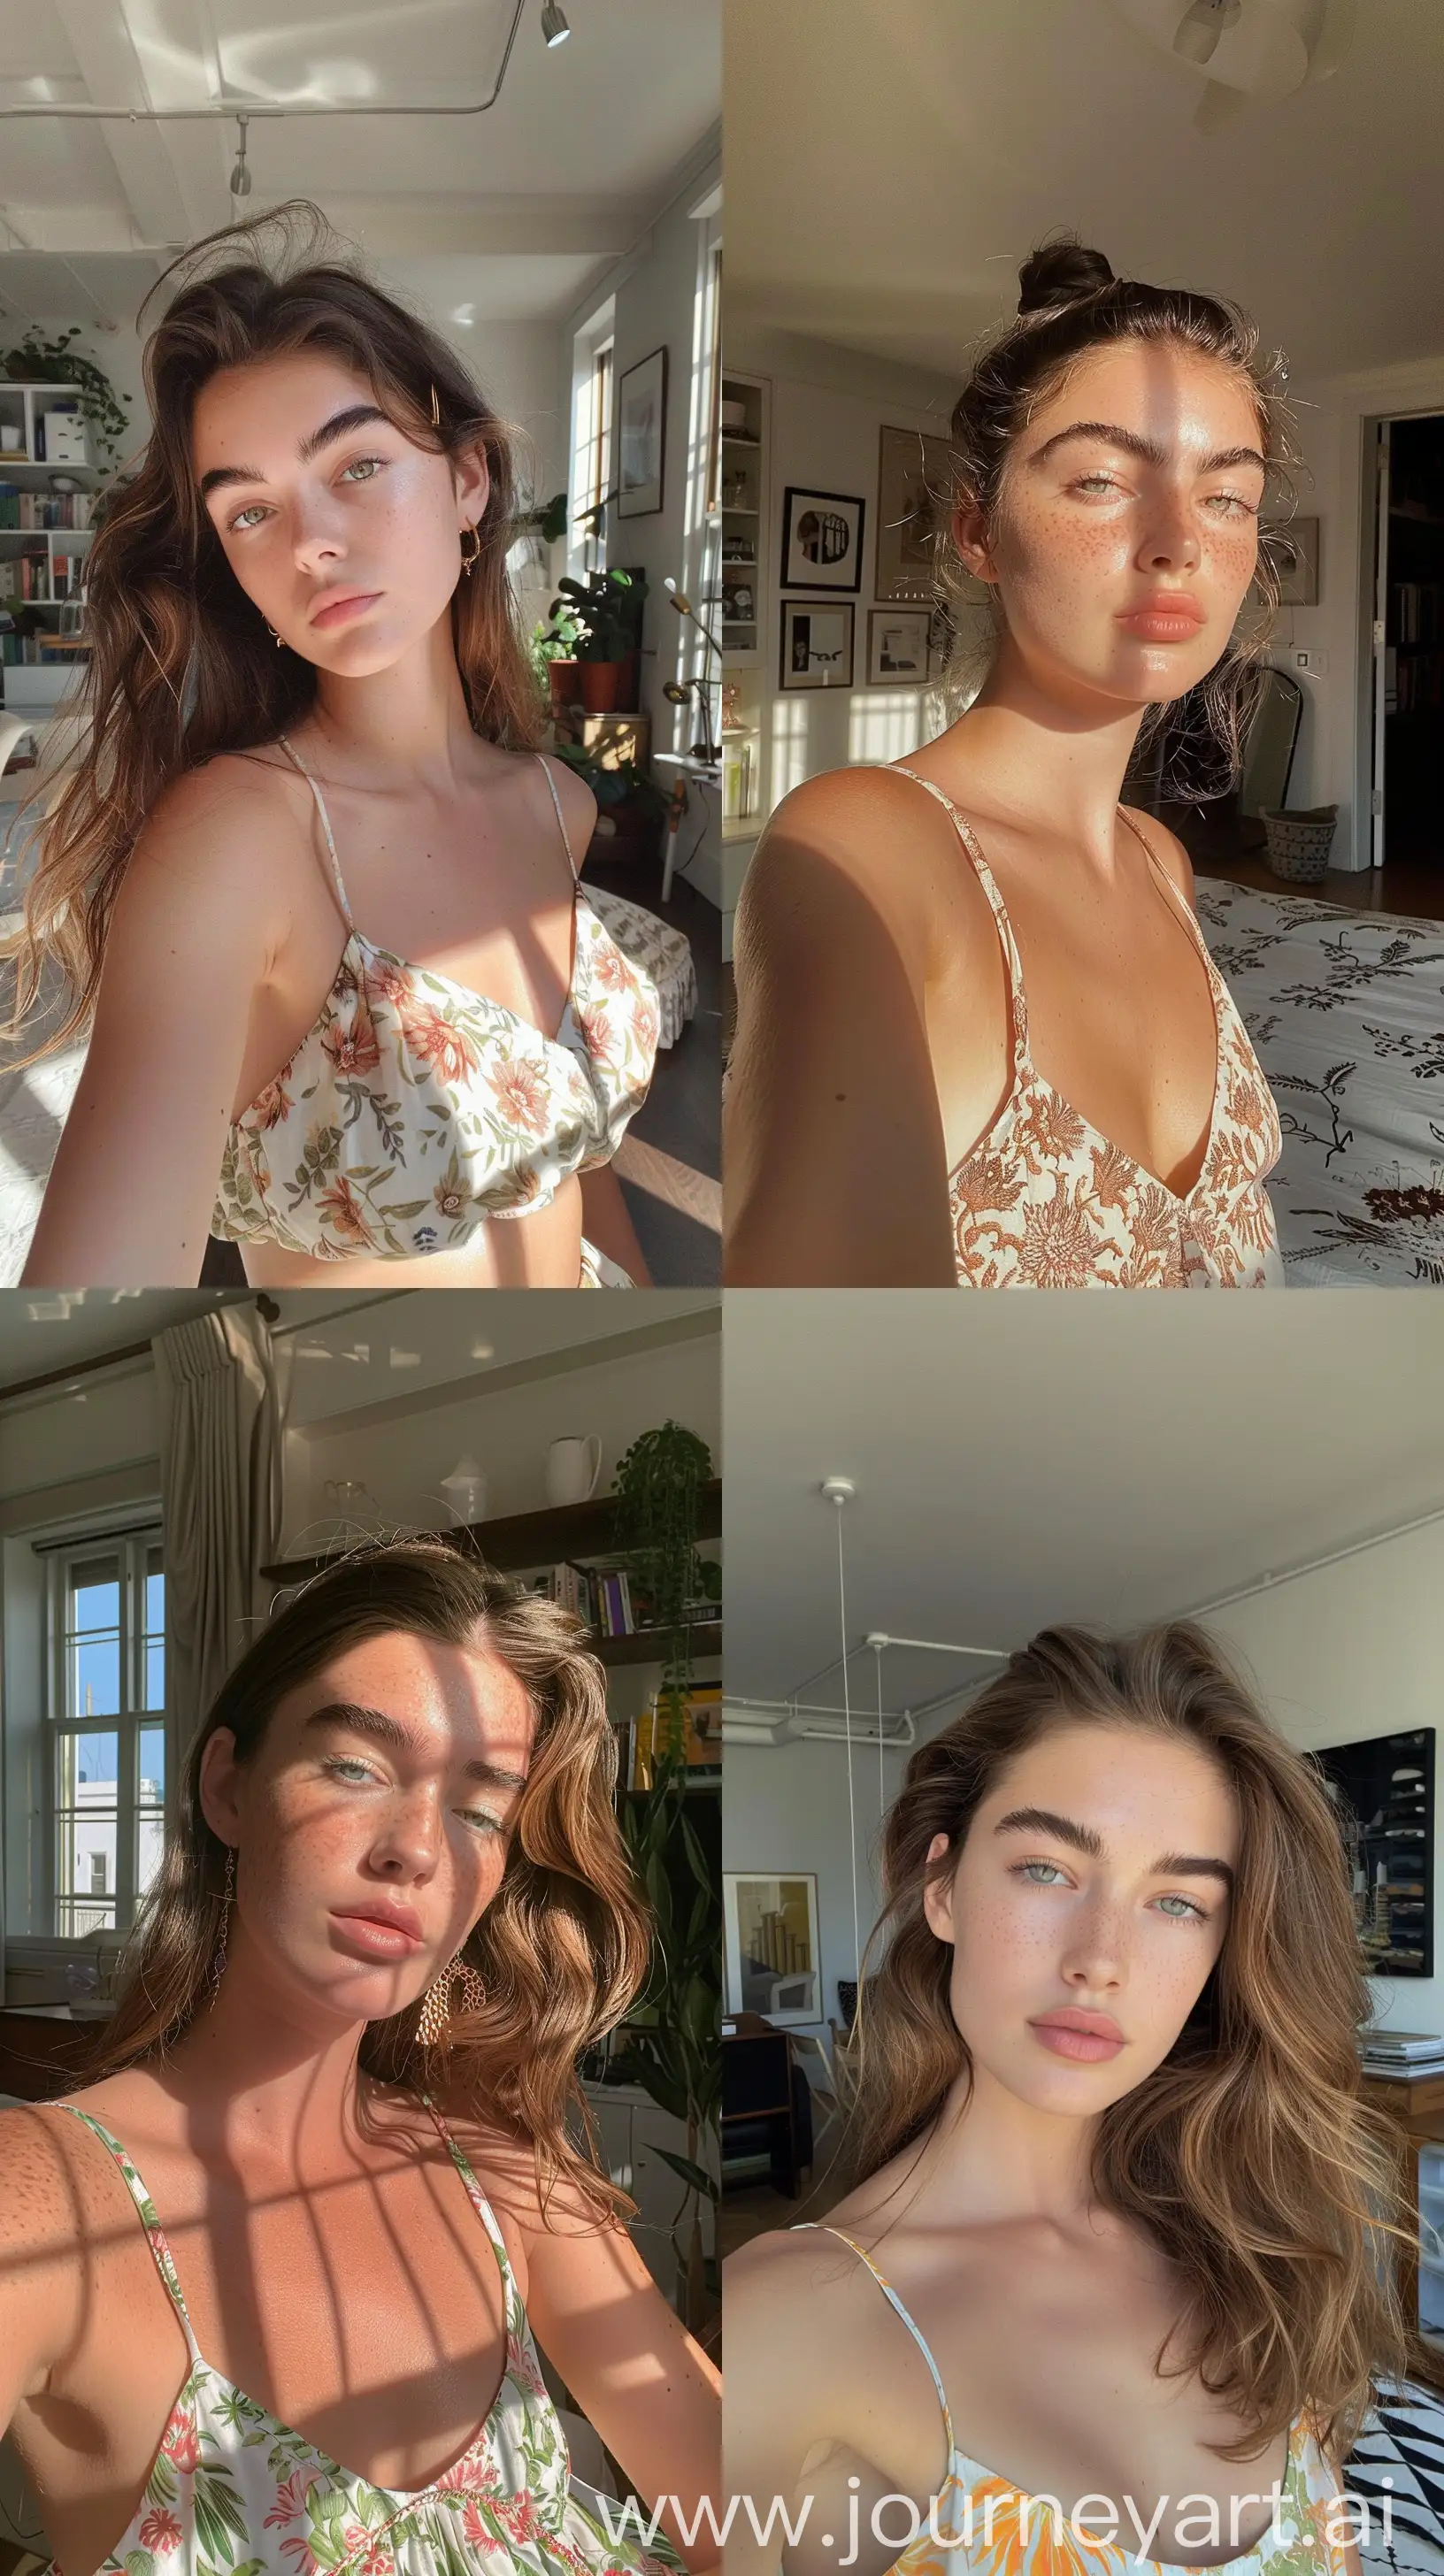 Stunning-Summer-Selfie-Teen-Model-with-Bushy-Eyebrows-in-New-York-Apartment